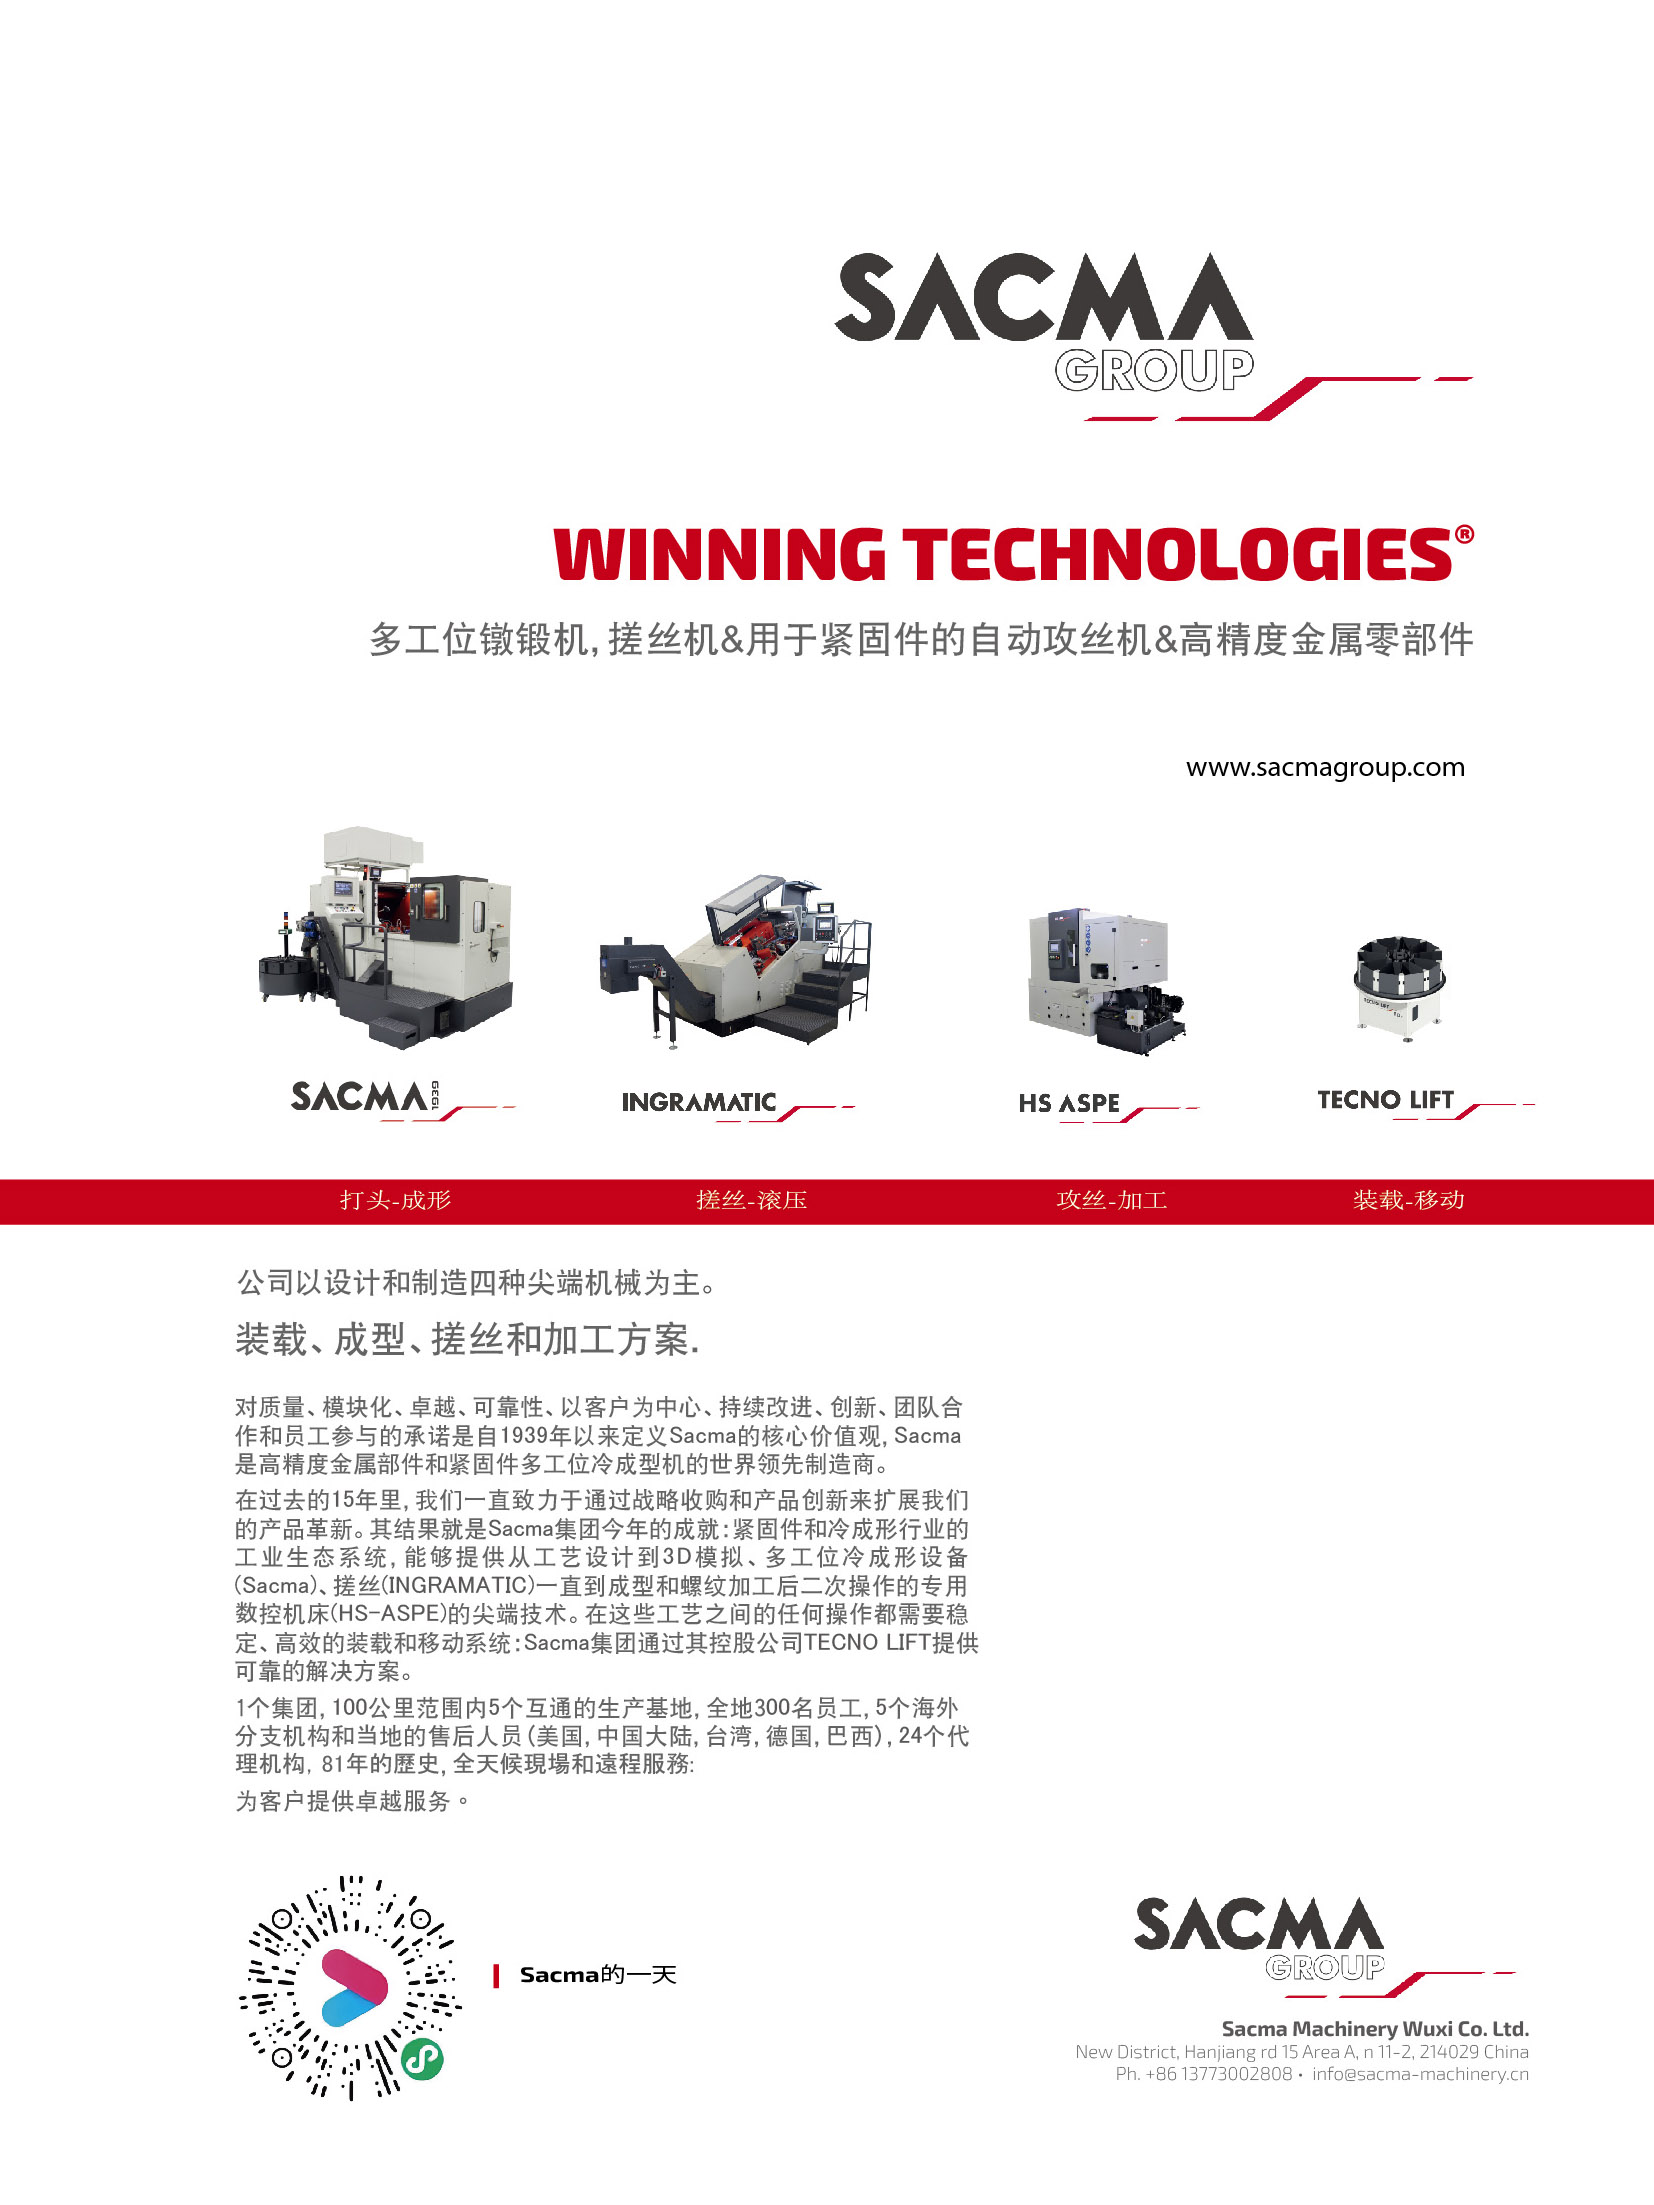 SACMA LIMBIATE S.P.A. , 多工位鐓鍛機, 搓絲機動用于緊固件的自動攻絲機&高精度金屬零部件